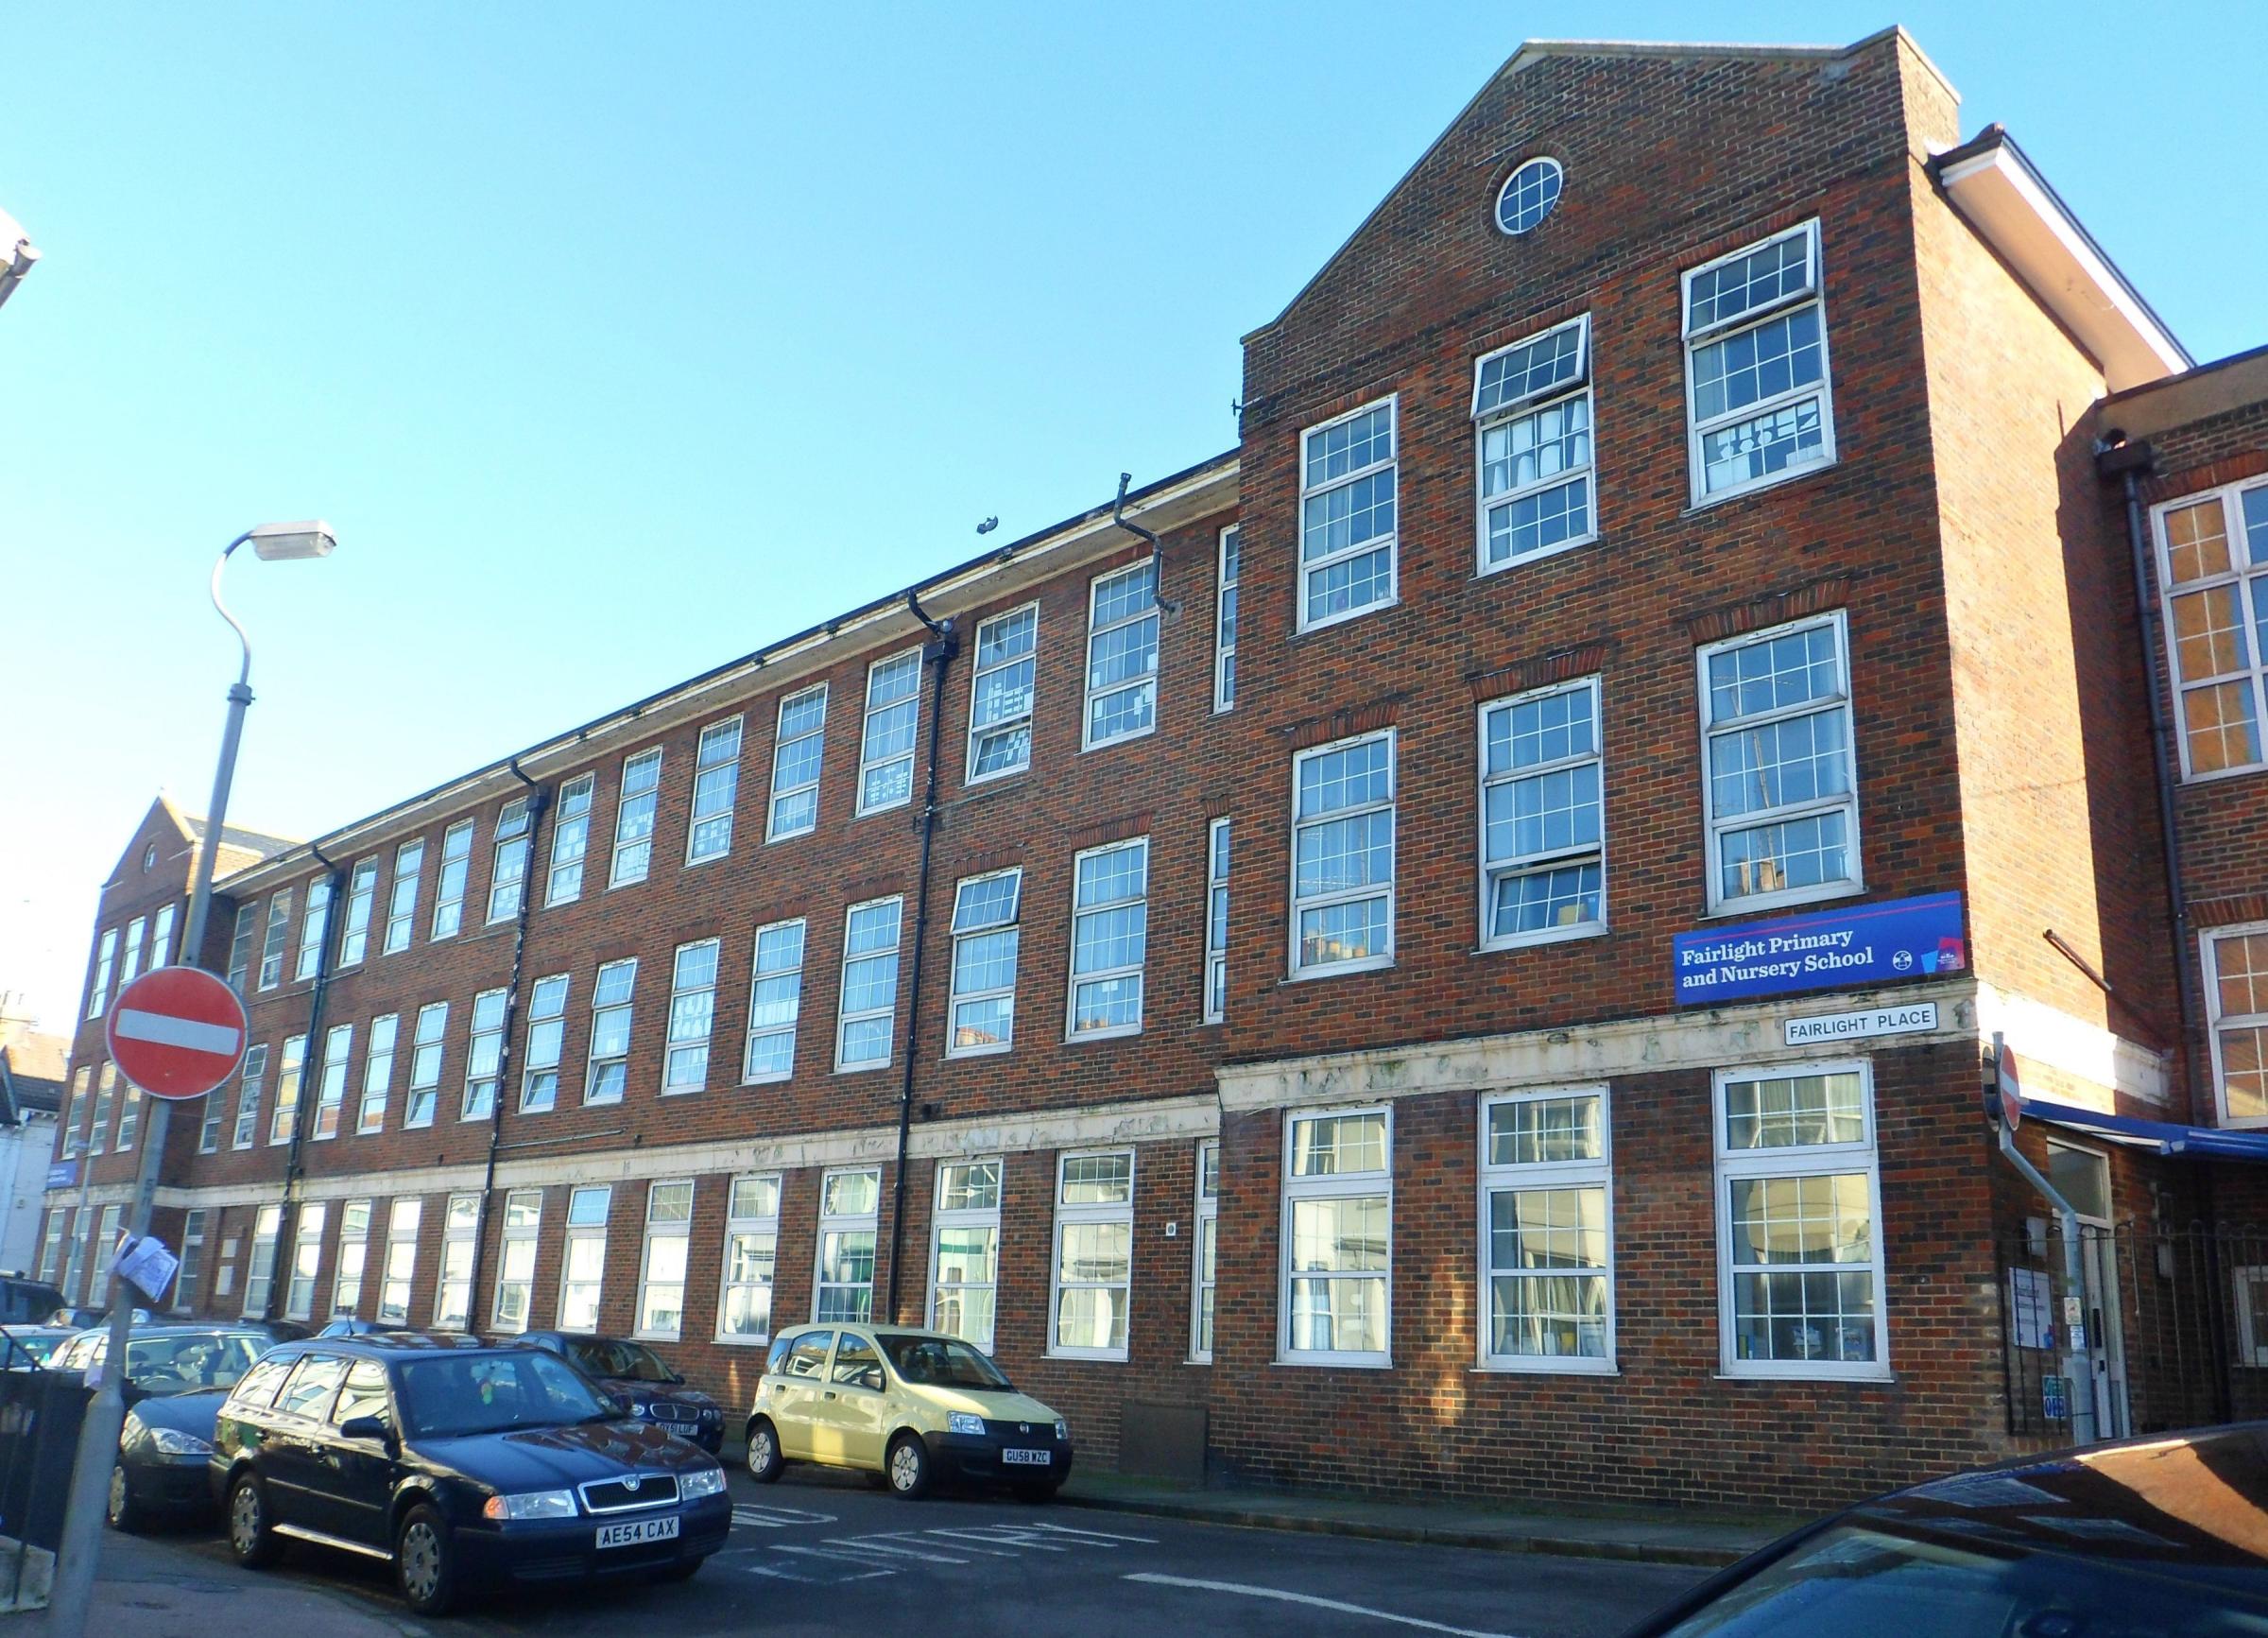  Fairlight Primary and Nursery School in Brighton